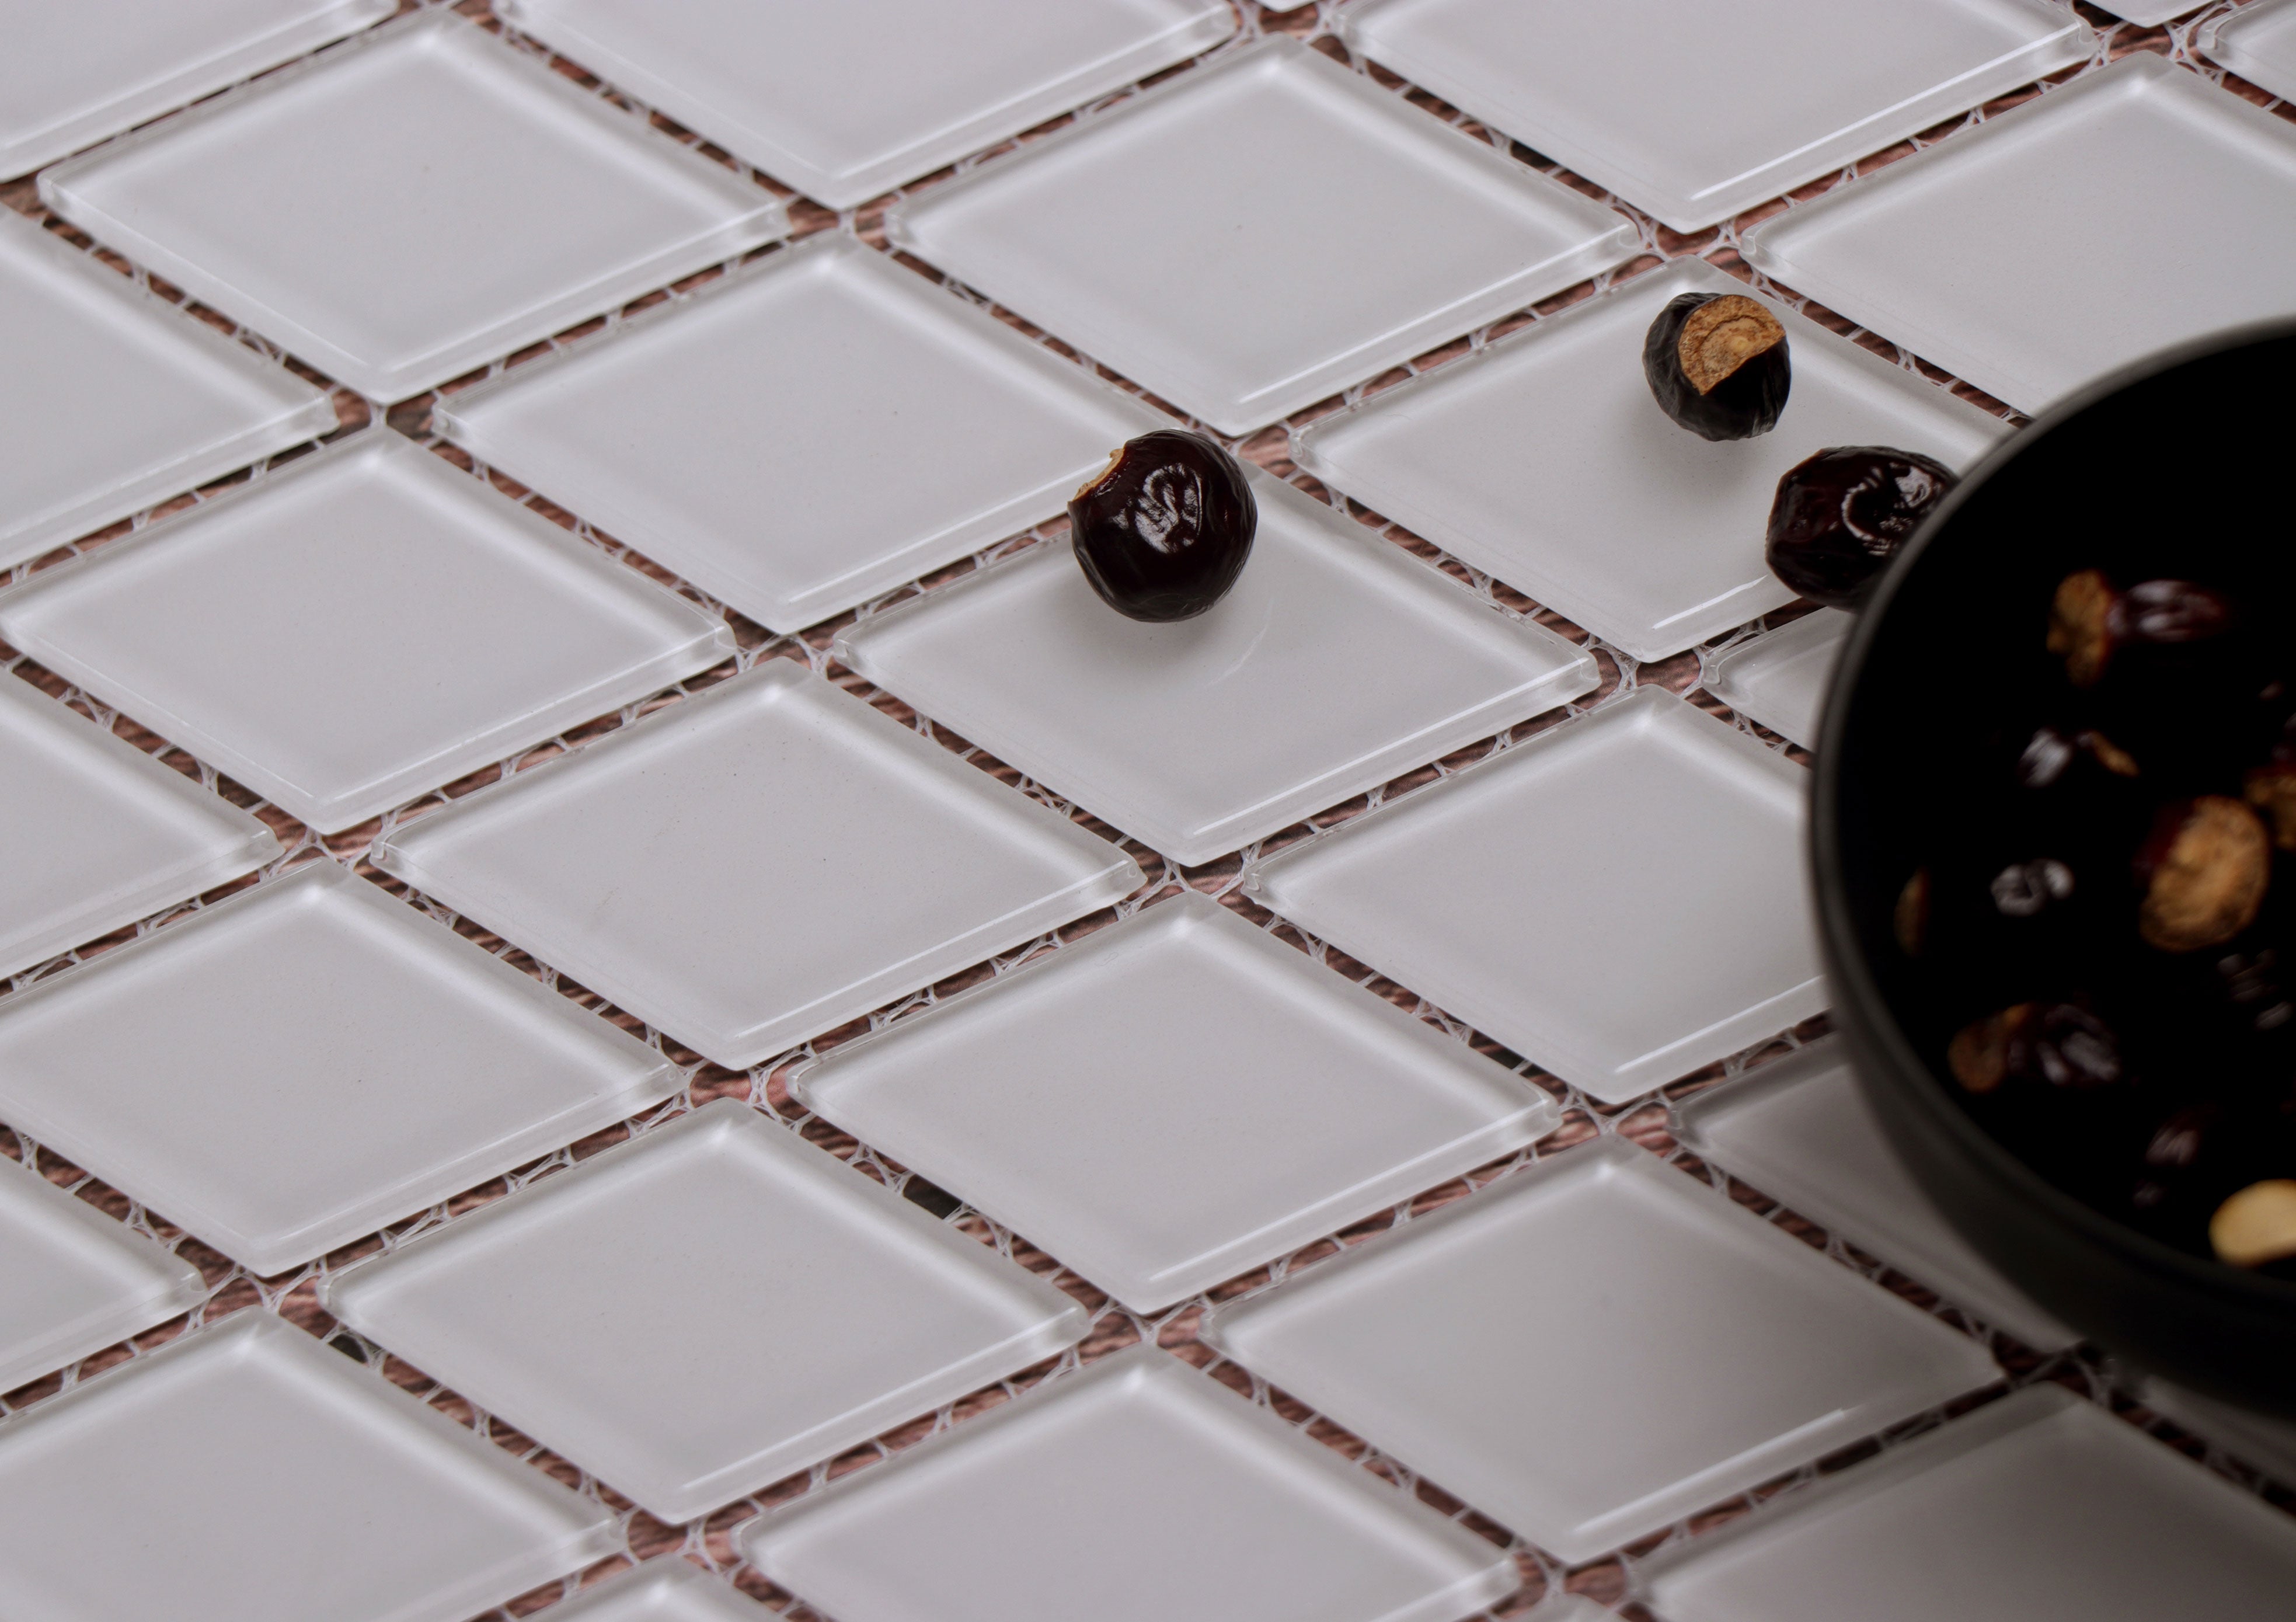 2" Diamond Glass Mosaic Tile, Backsplash for Kitchen and Bathroom - 6.5 Square Feet Per Carton